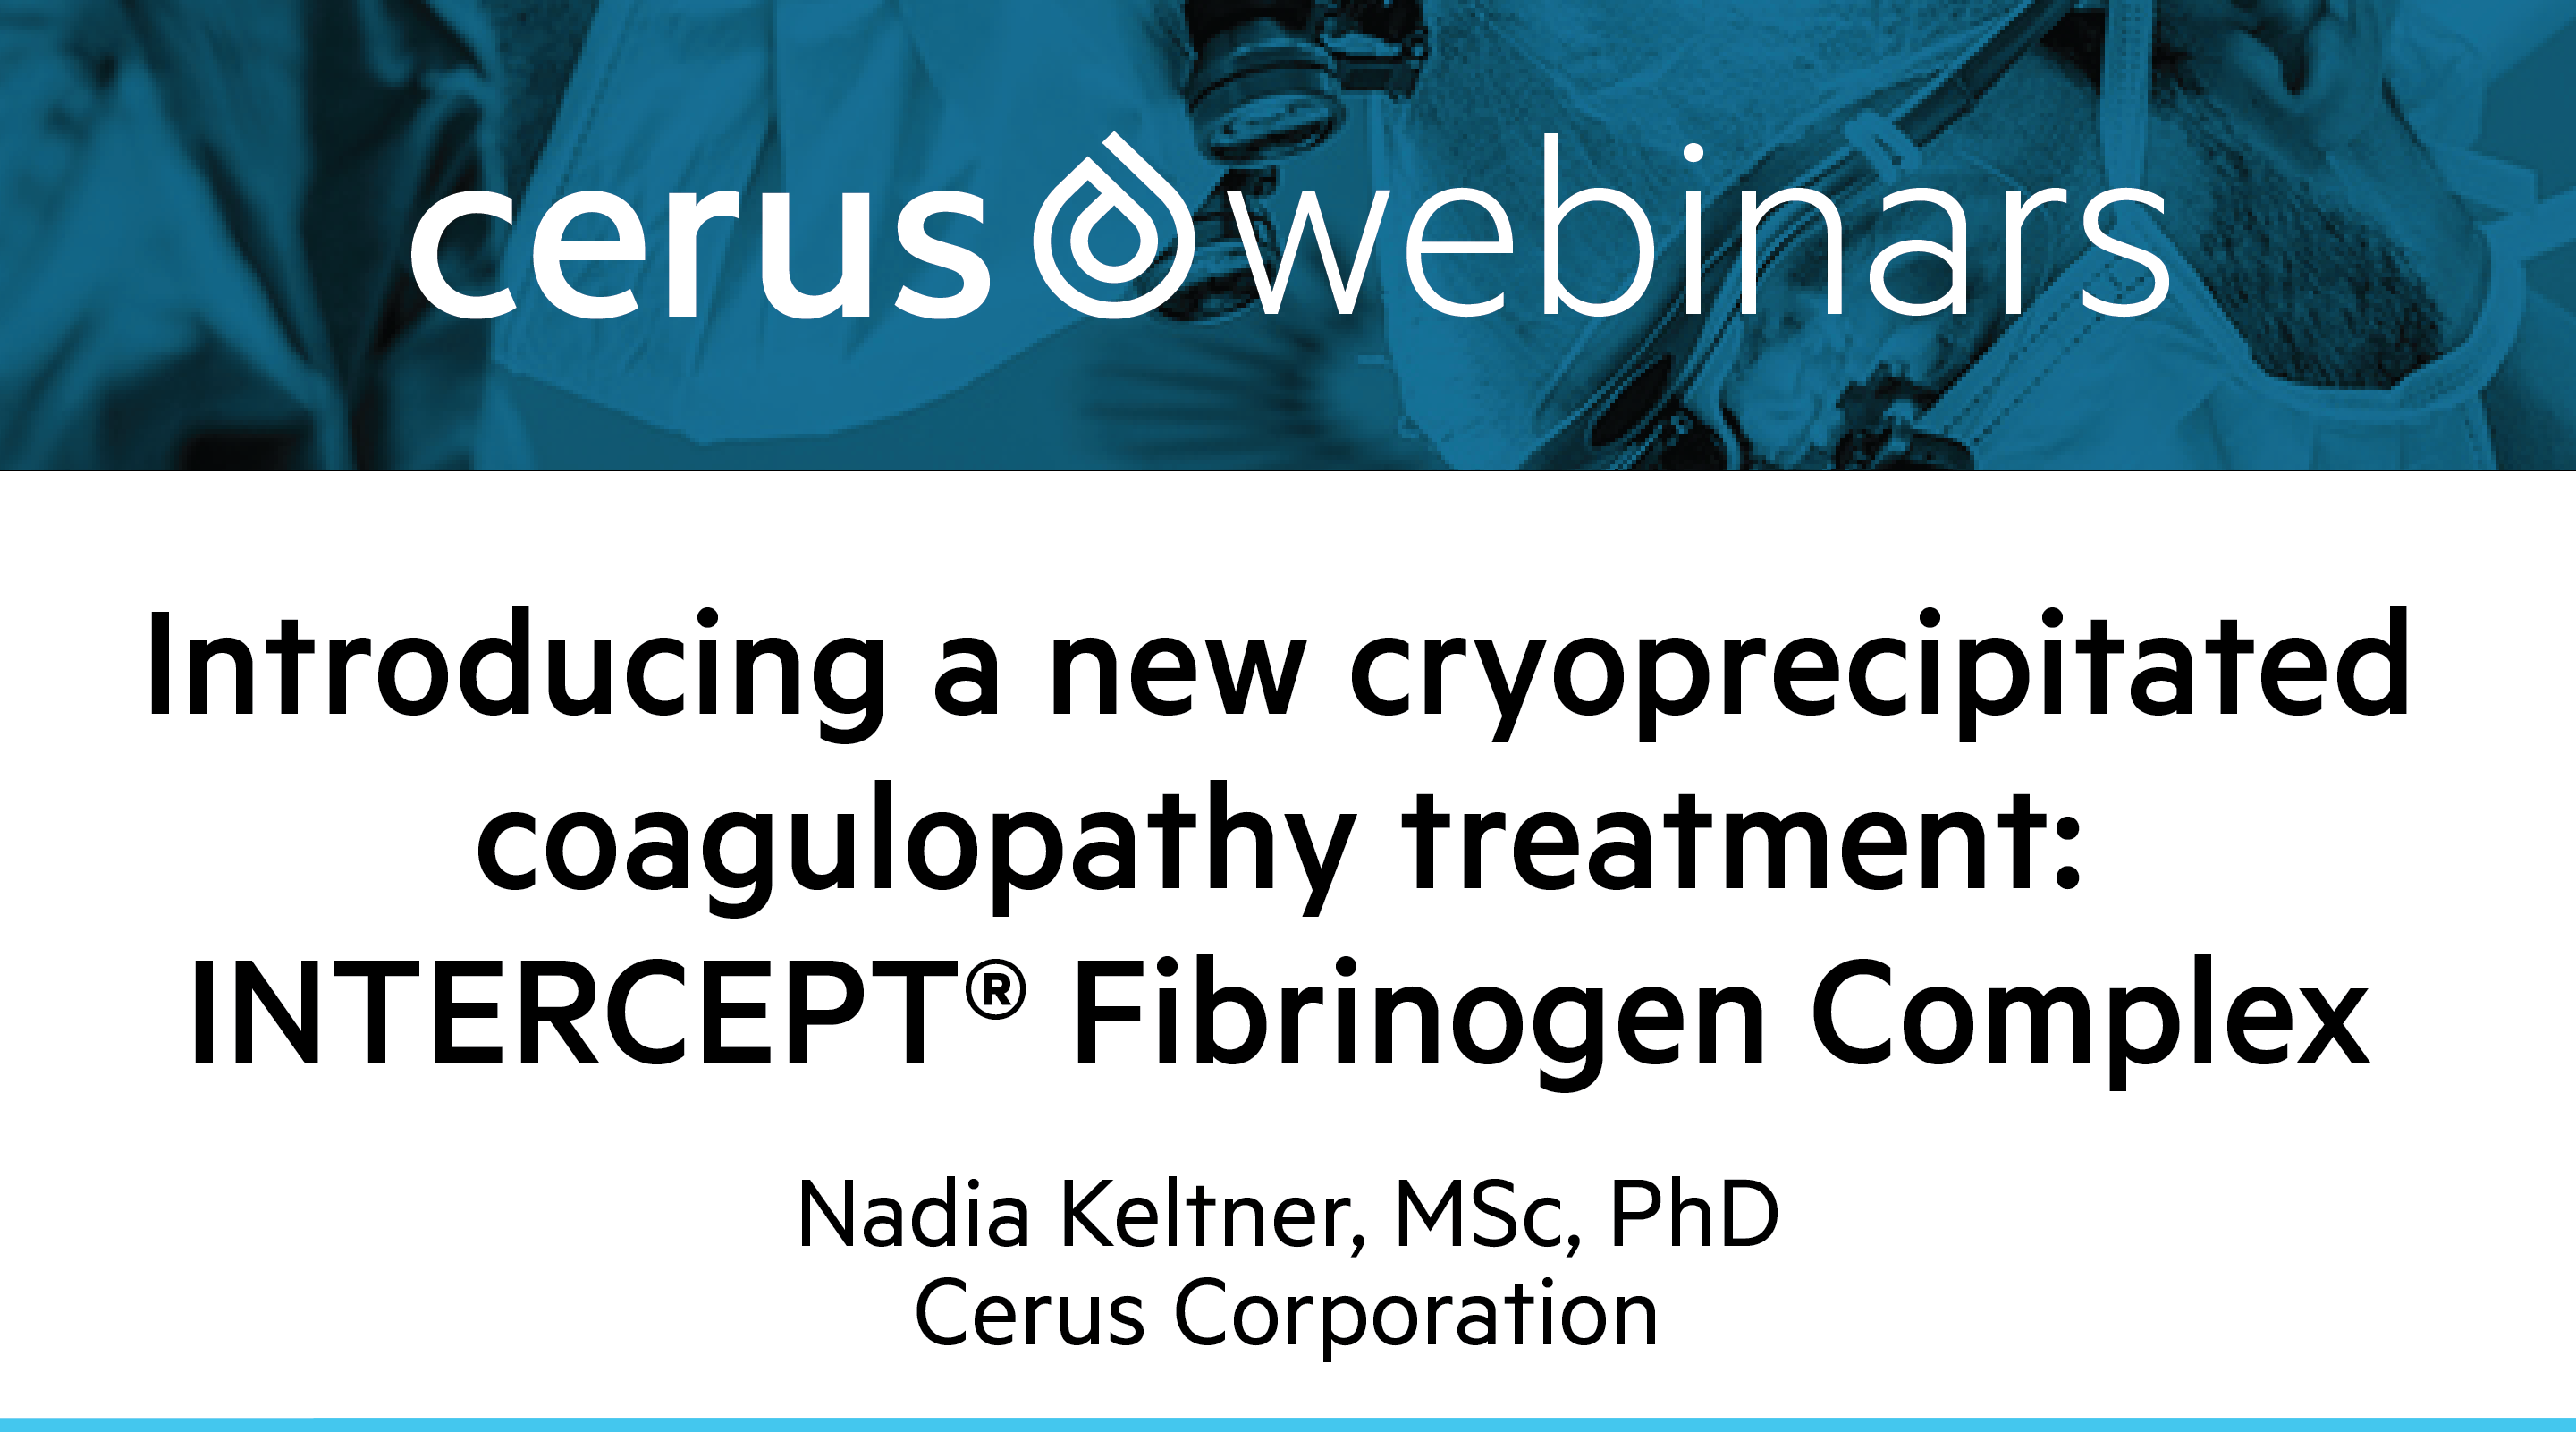 Introducing a new cryoprecipitated coagulopathy treatment: INTERCEPT® Fibrinogen Complex